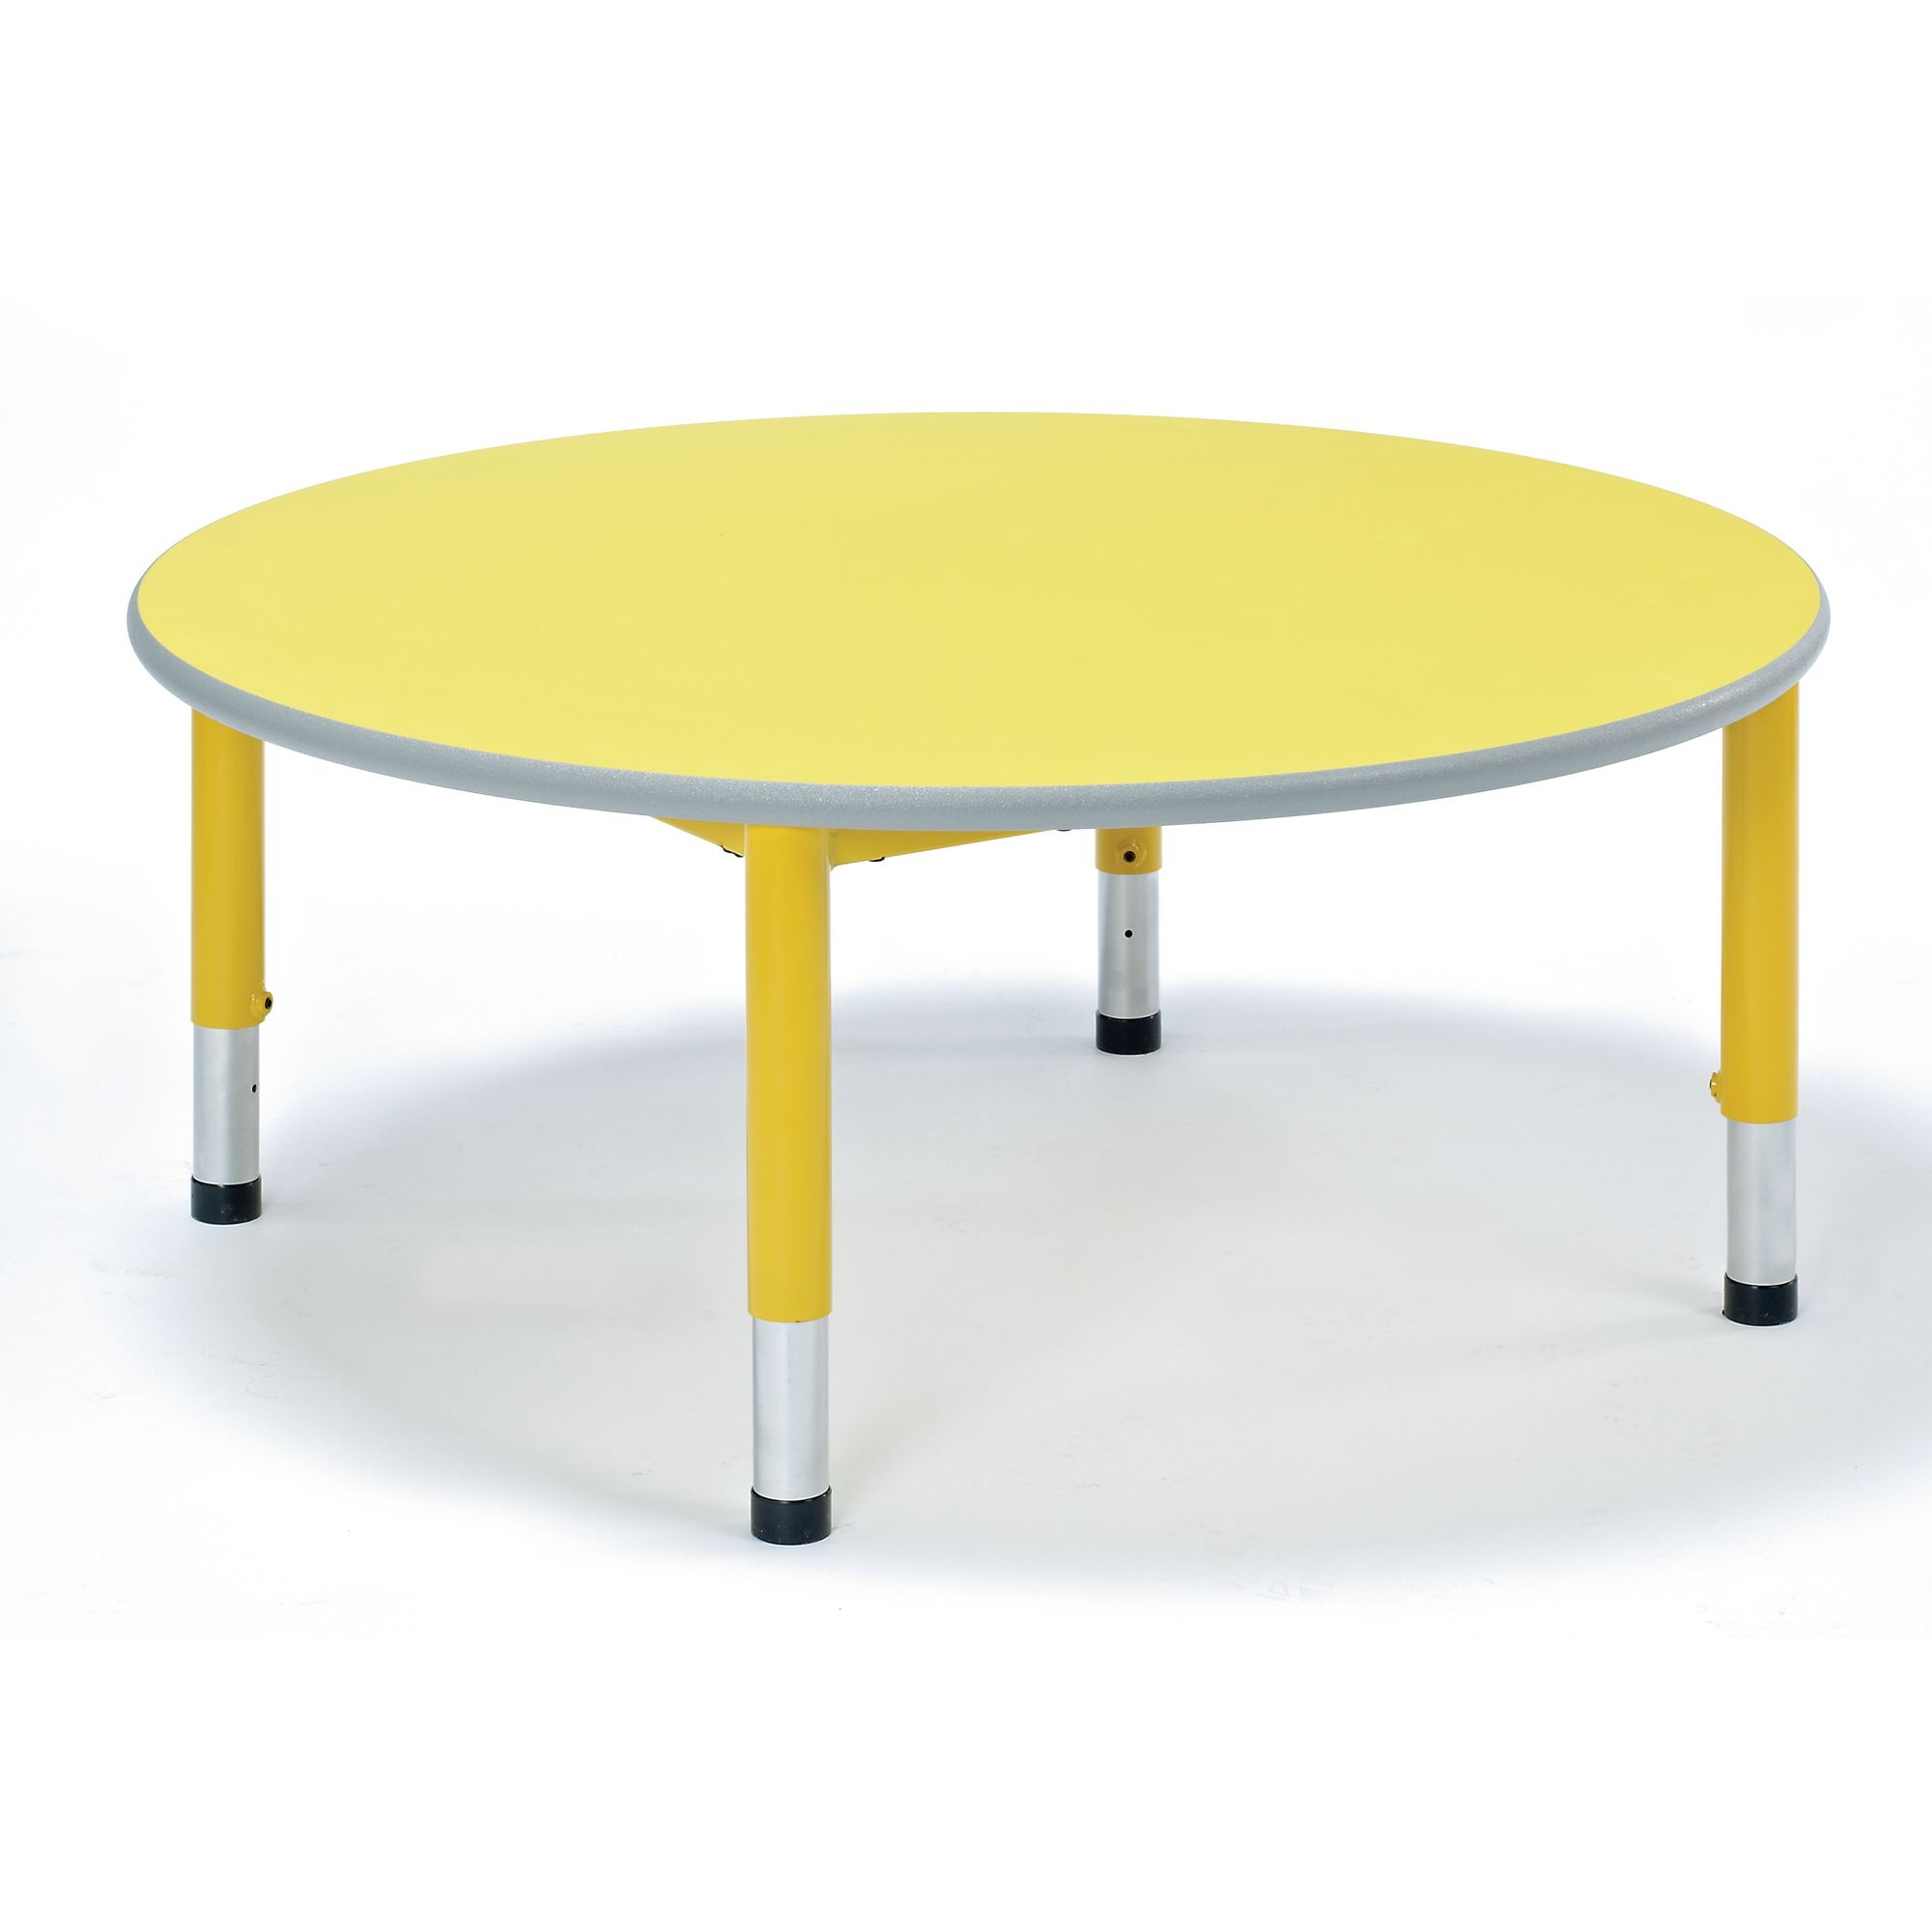 Harlequin Circular Height Adjustable Steel Classroom Table - 1050 x 400 to 640mm - Yellow